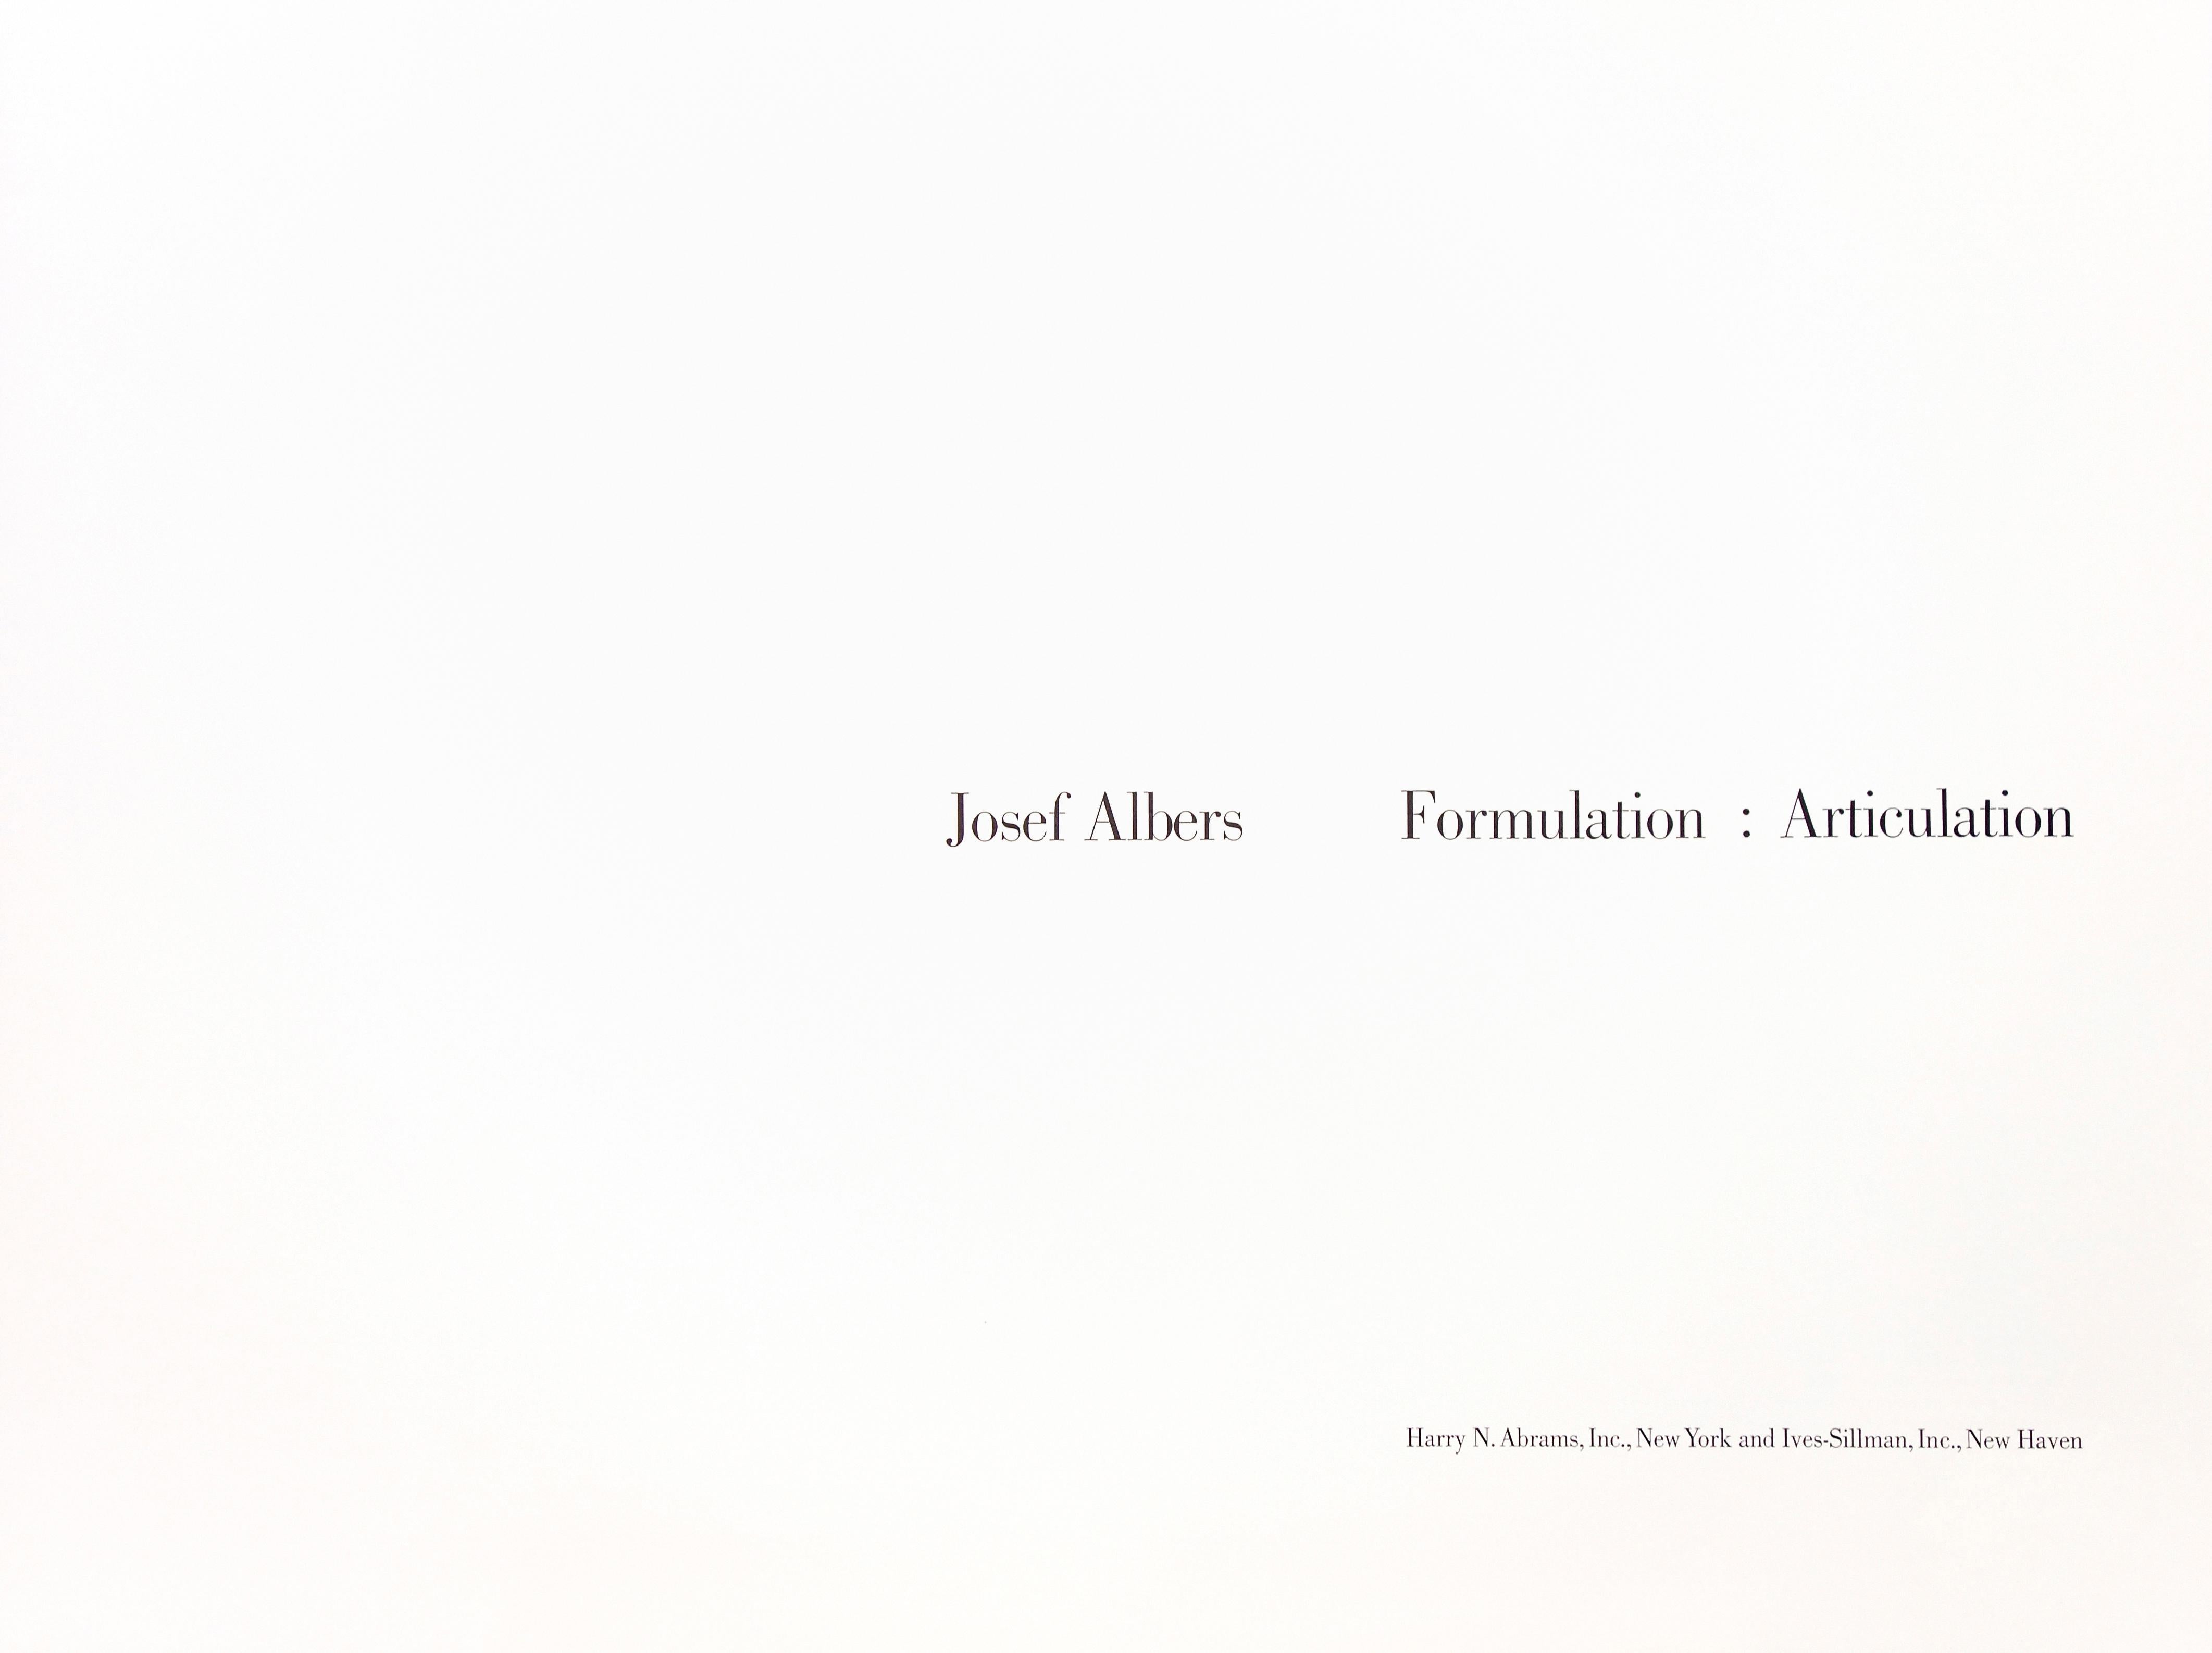 Formulation : Articulation, Portfolio I Folder 27 (A) - Abstract Print by Josef Albers